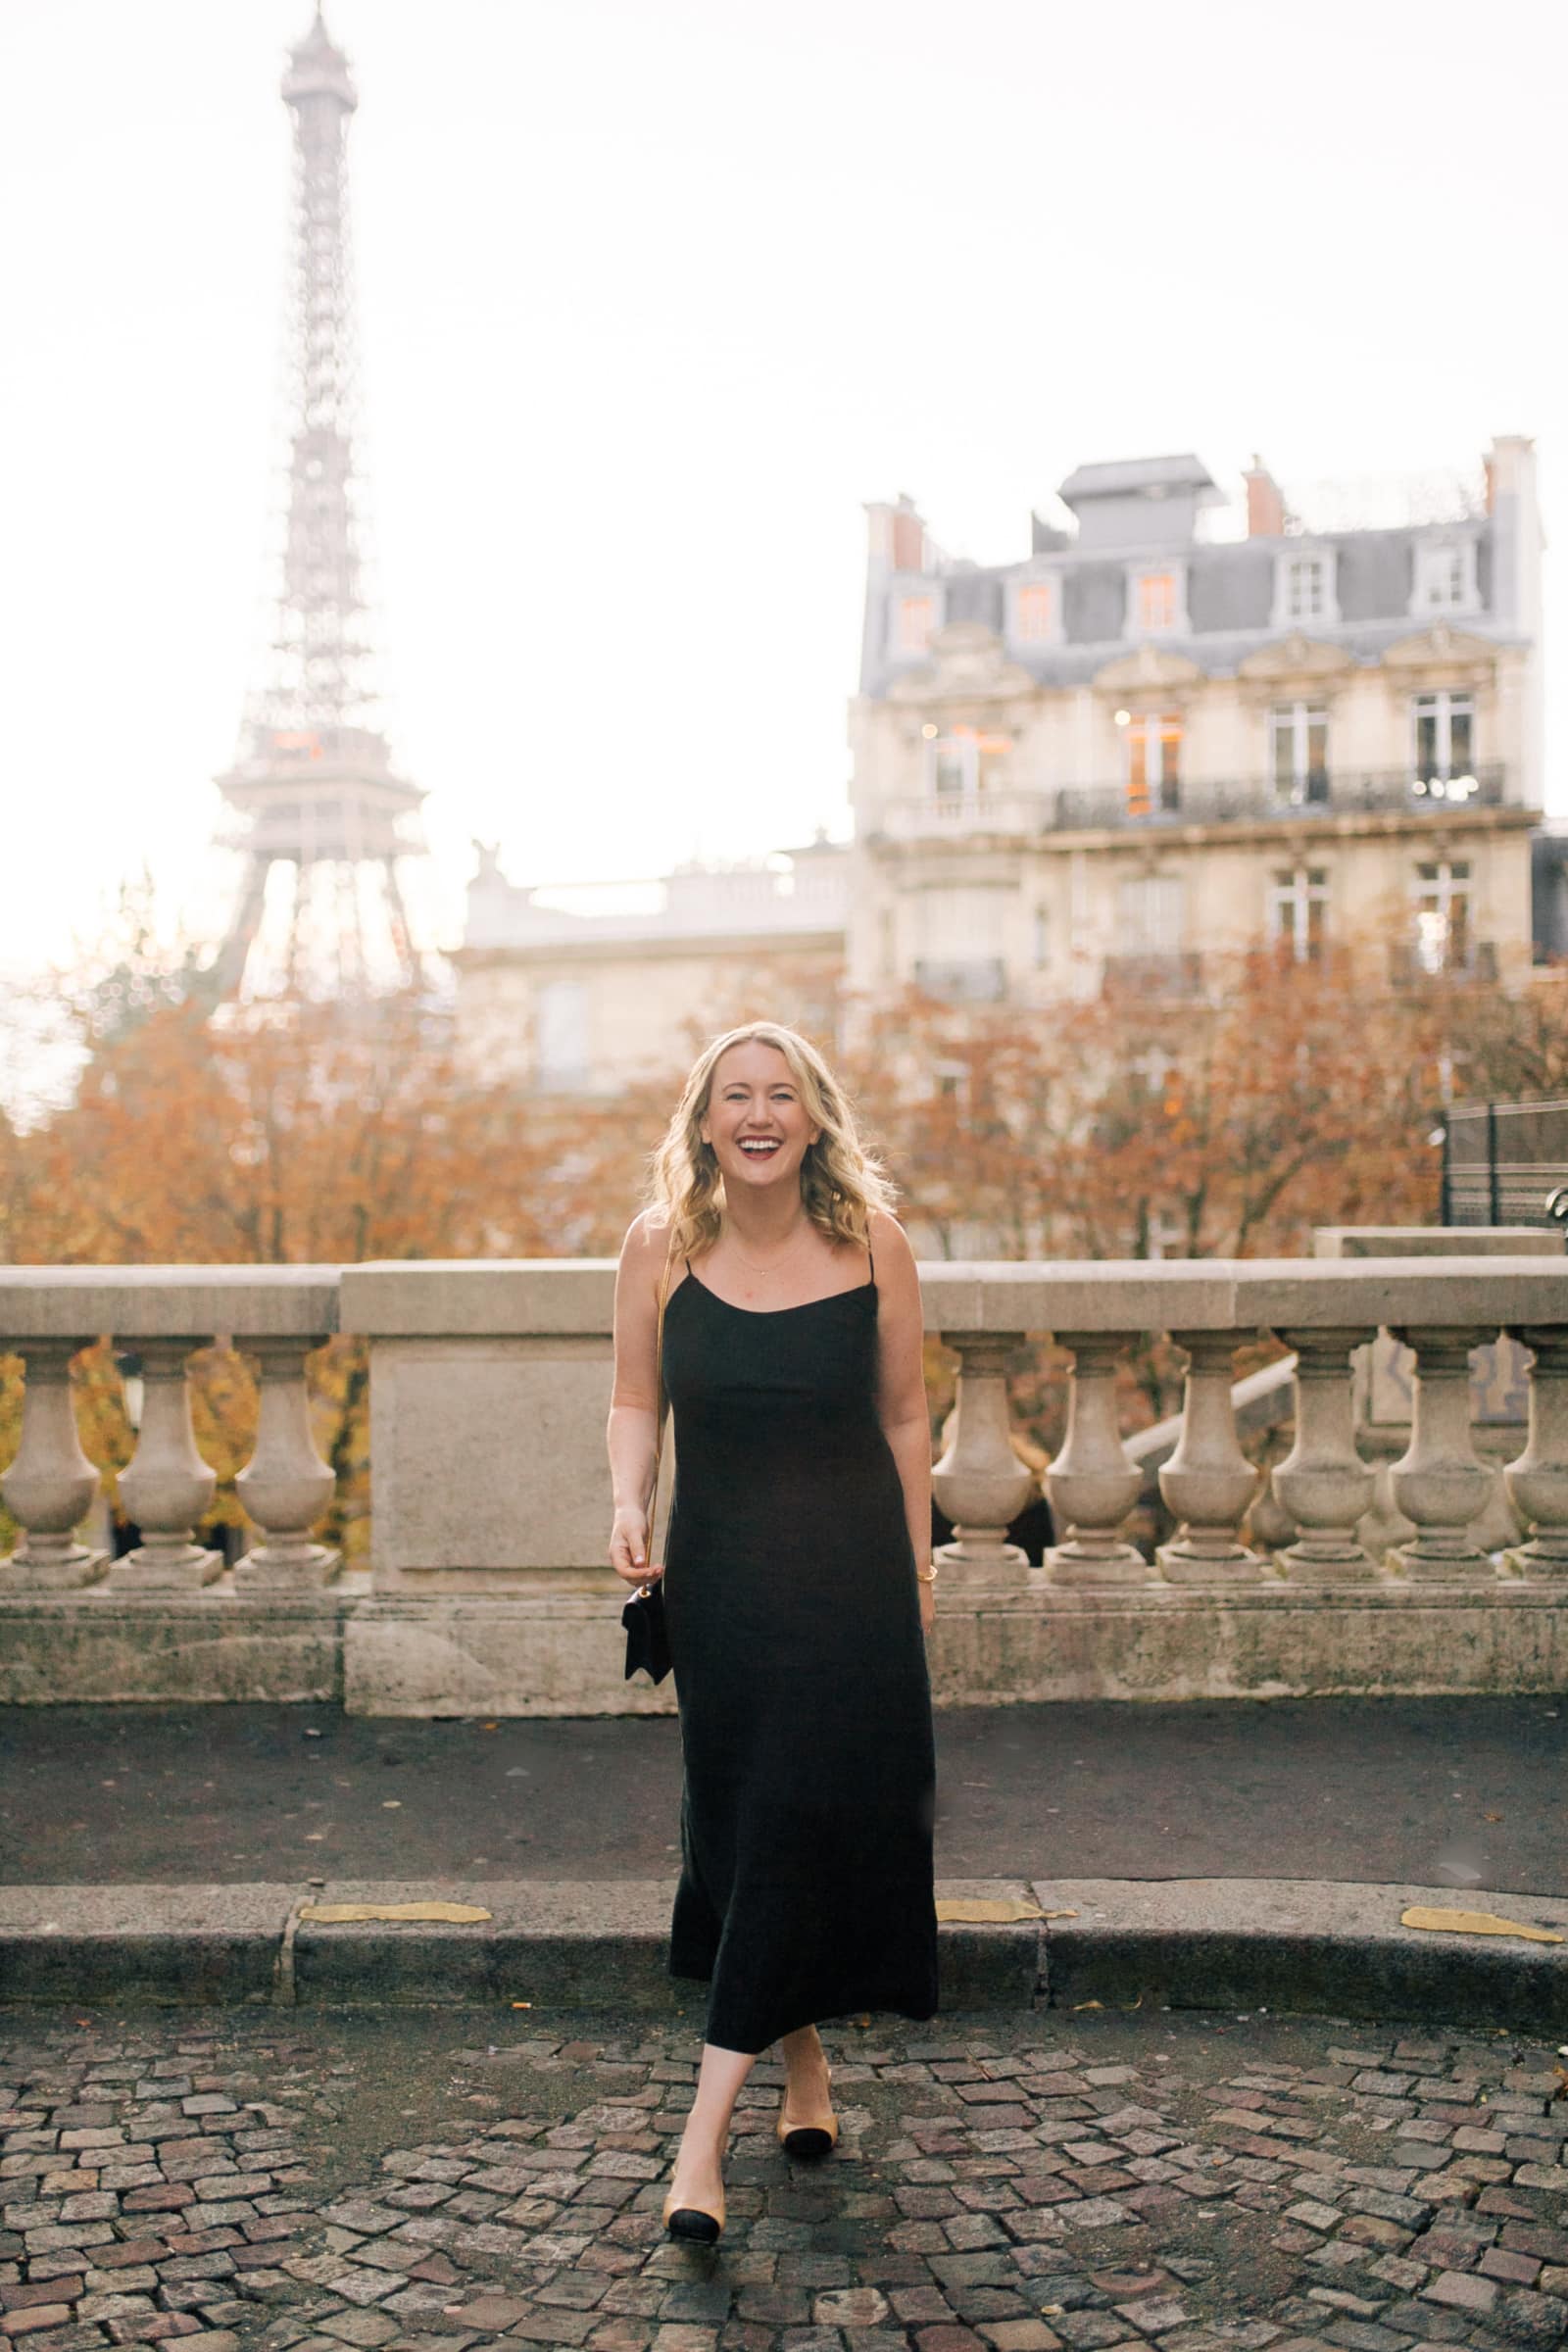 Black slip dress outfit in Paris